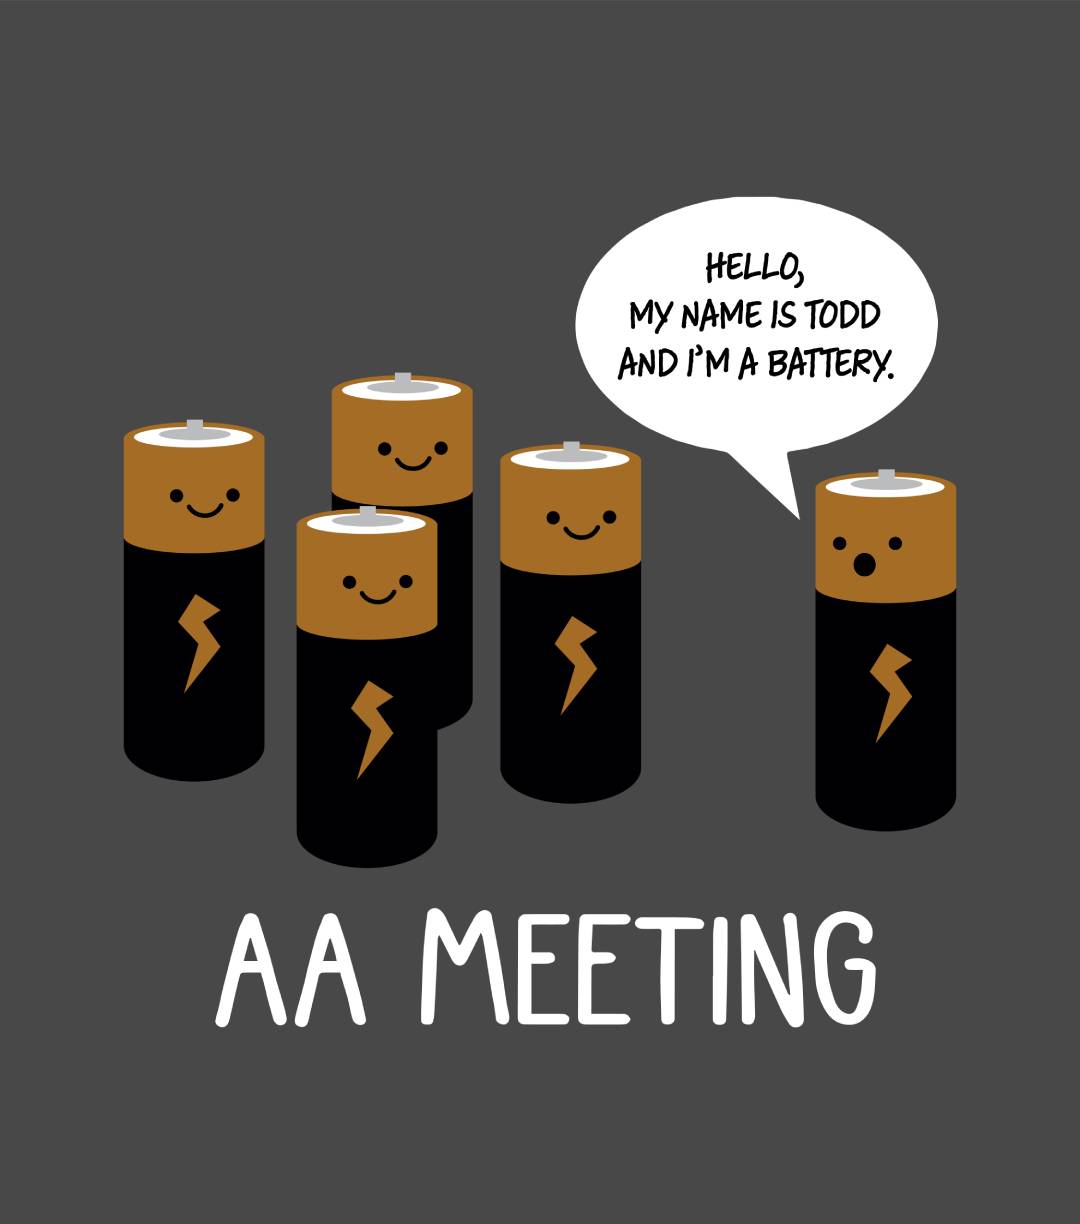 AA MEETING T-Shirt